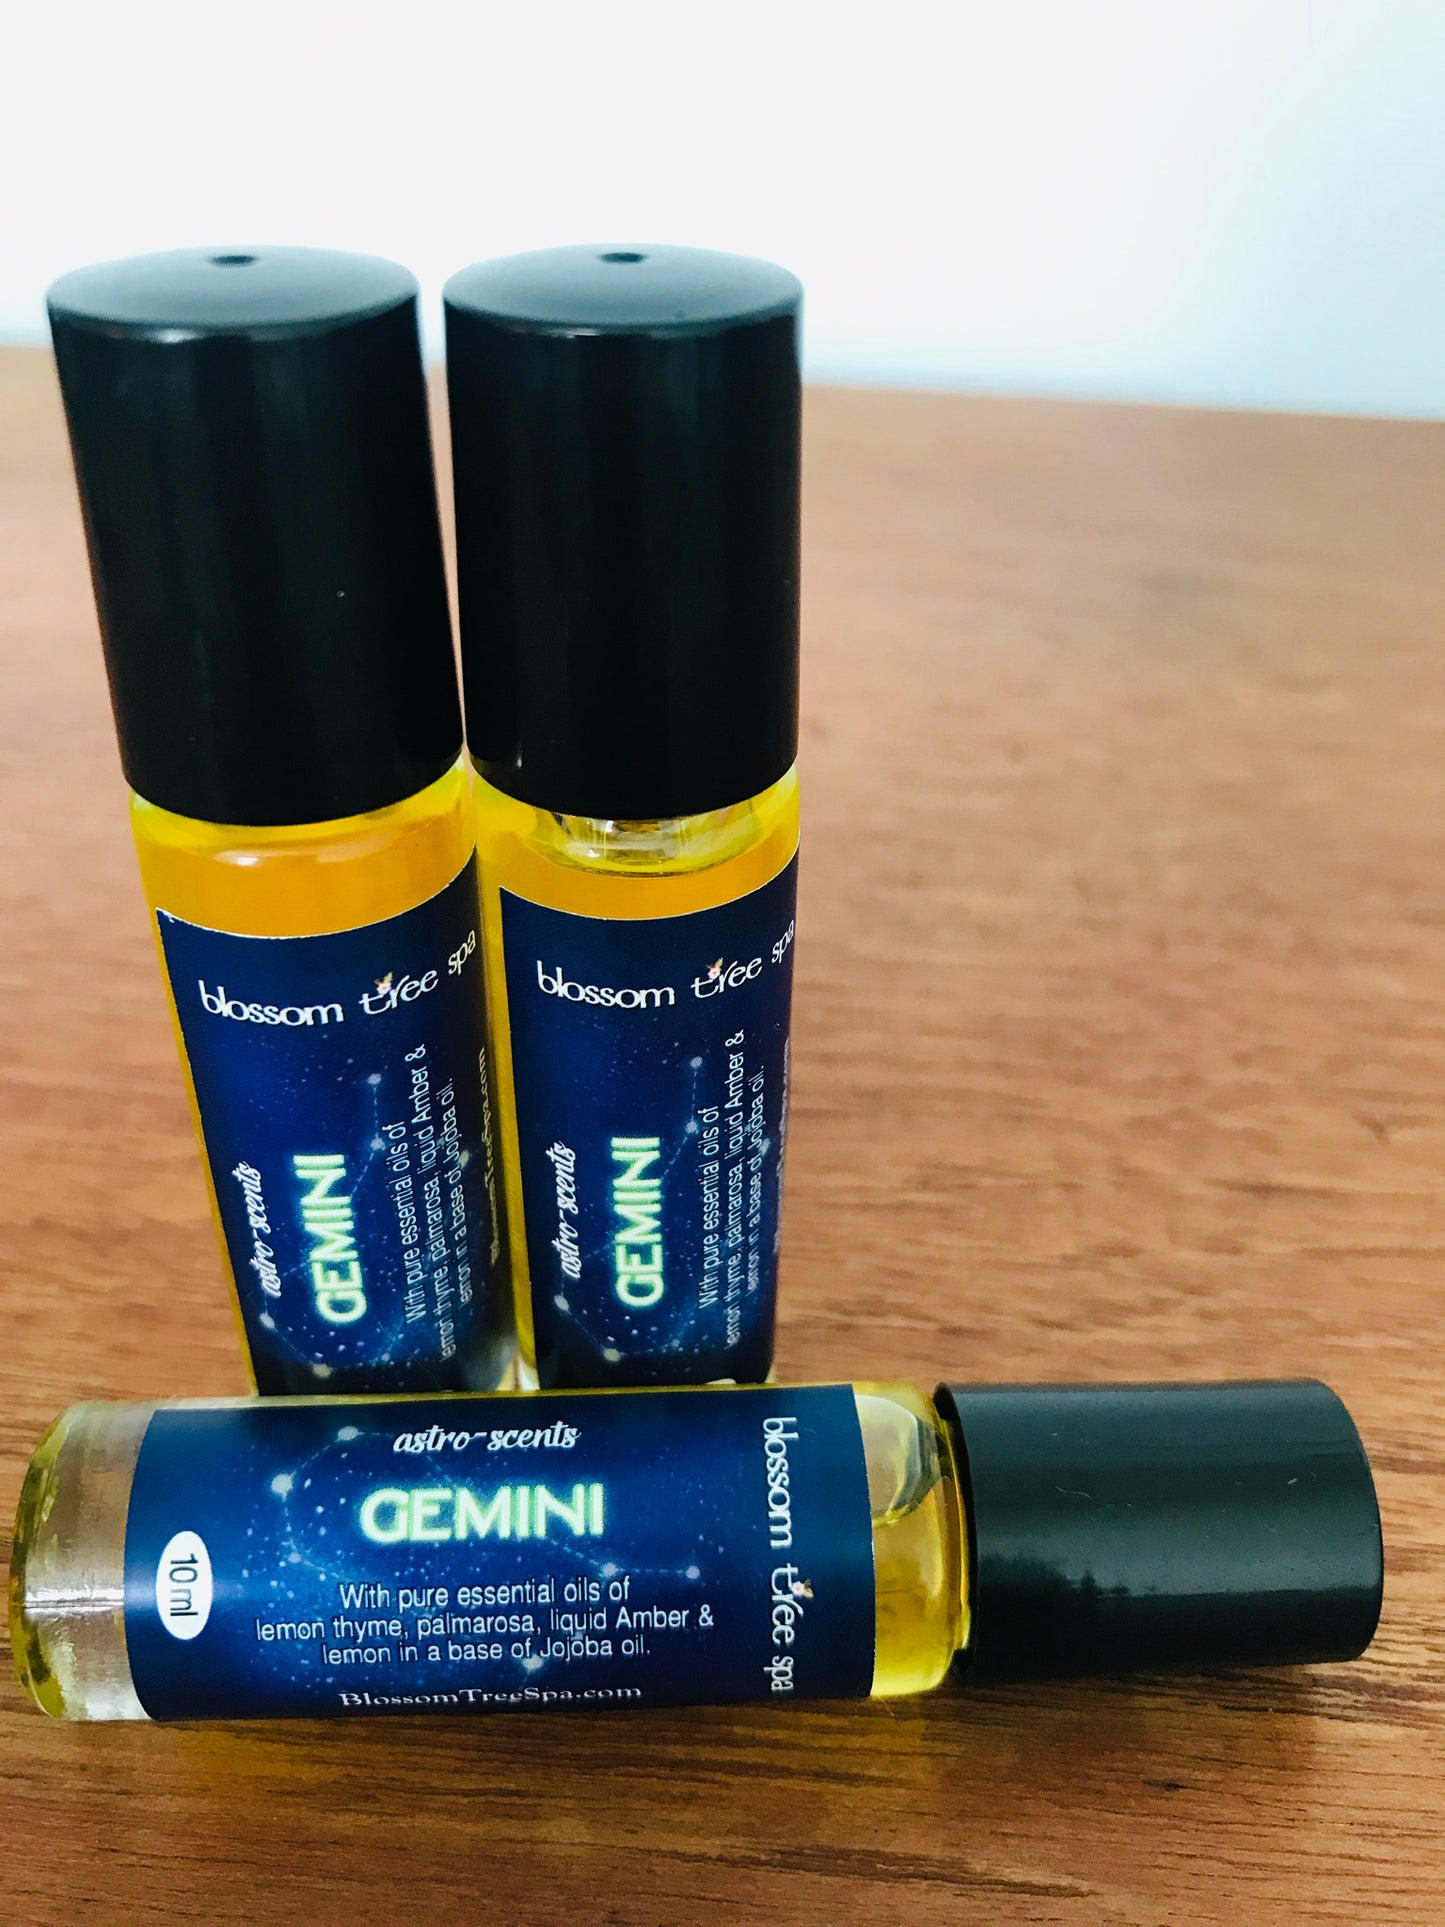 Gemini Astro-scent roller bottle